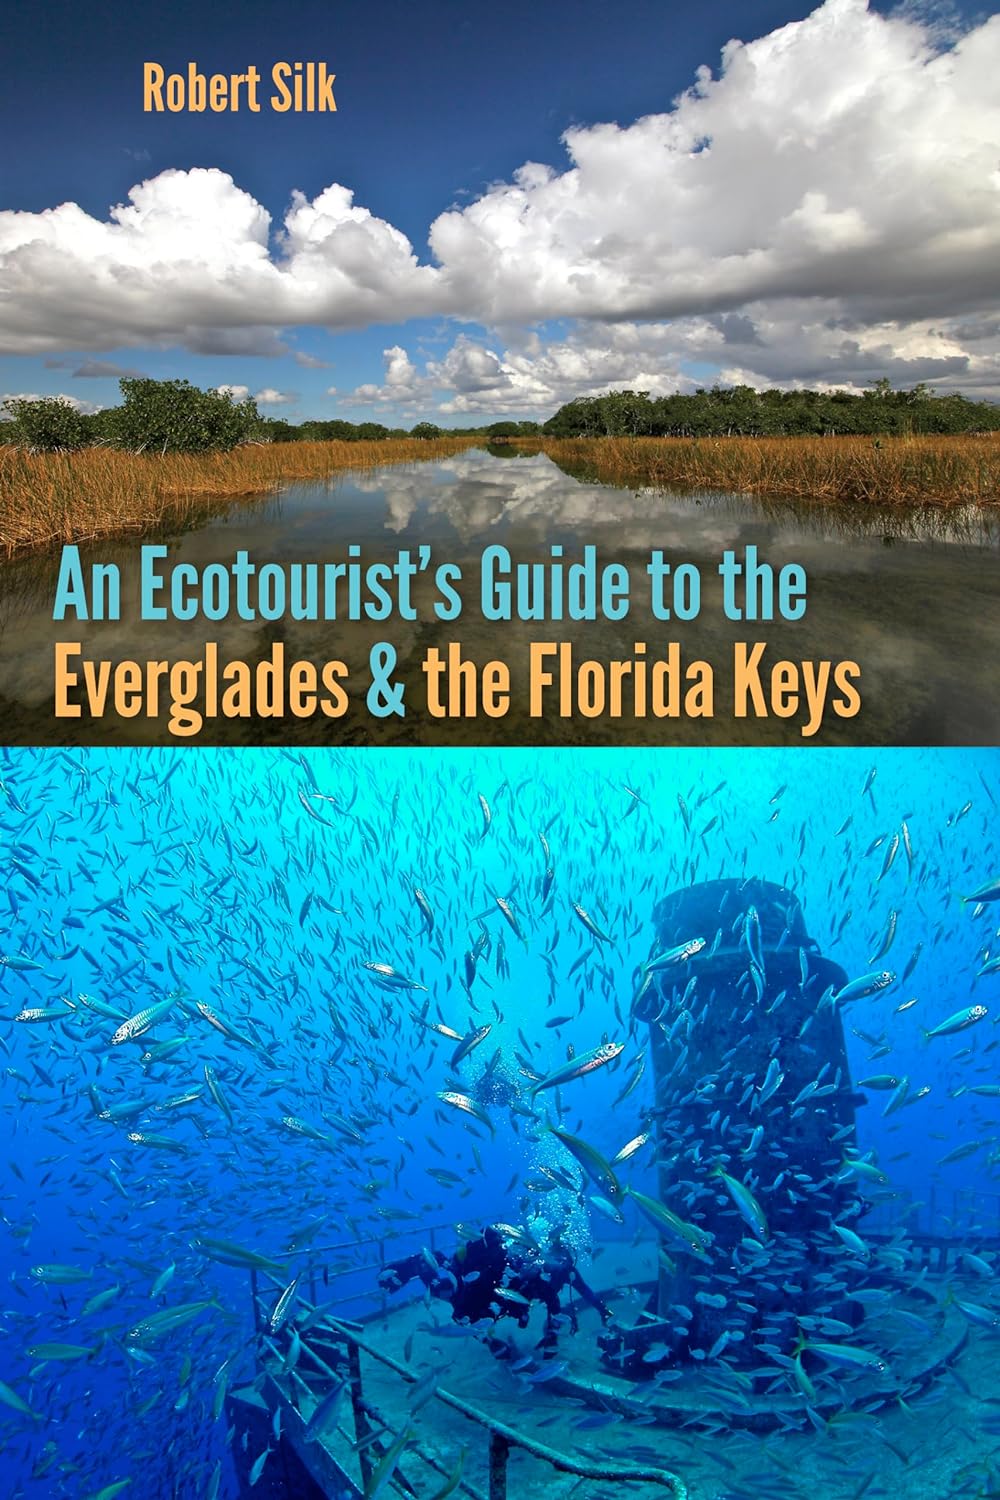 Ecotourists Guide to Everglades and Florida Keys